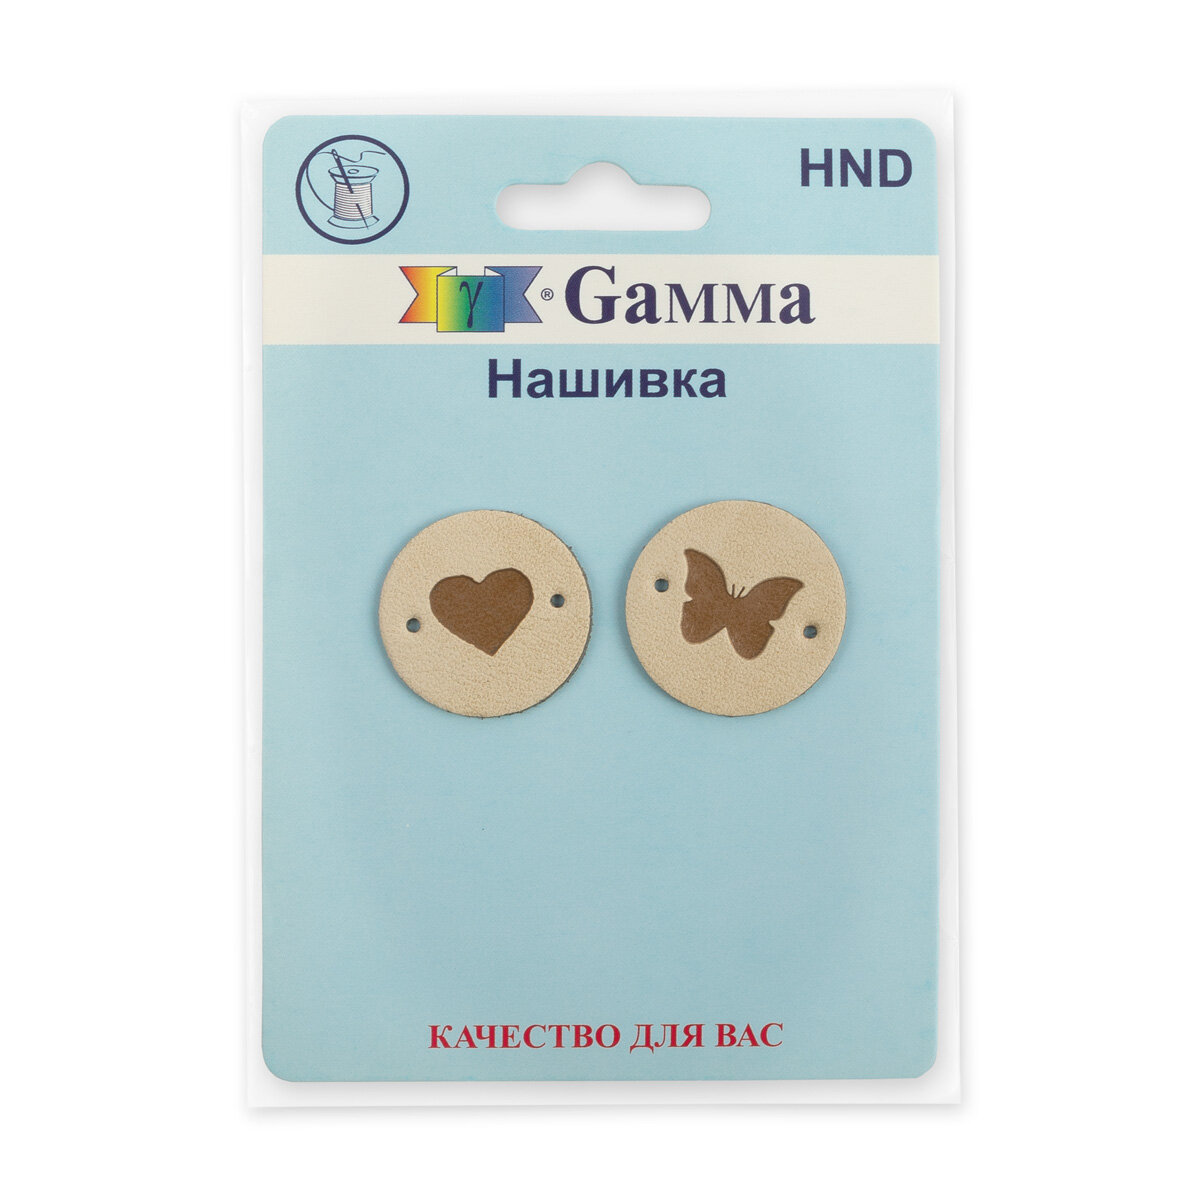 Нашивка "Gamma" HND-05 "handmade" 2 шт. 05-3 круг светло-бежевый